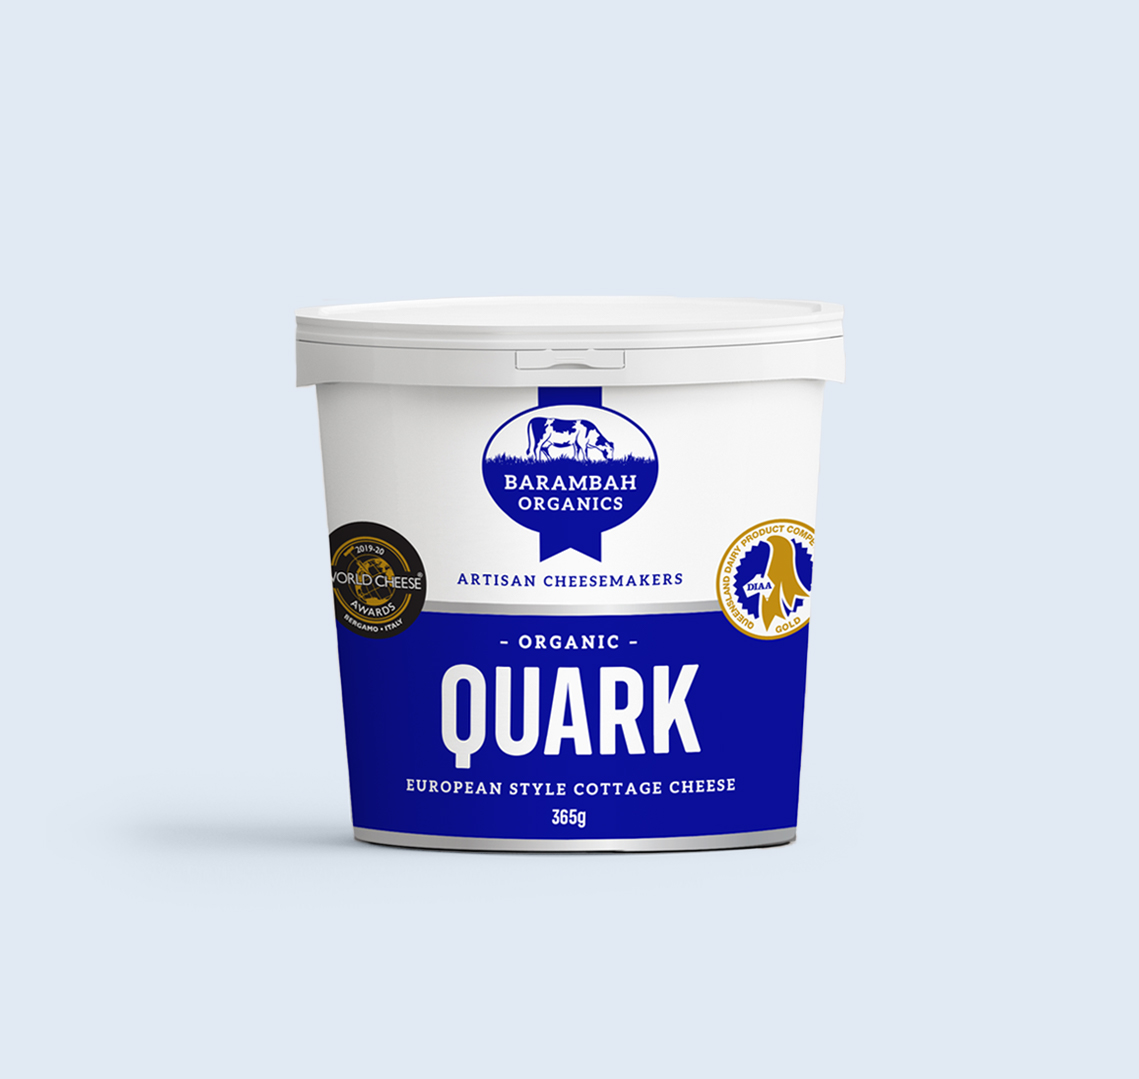 365g of Organic Quark - Organic Cottage Cheese - Barambah Organics